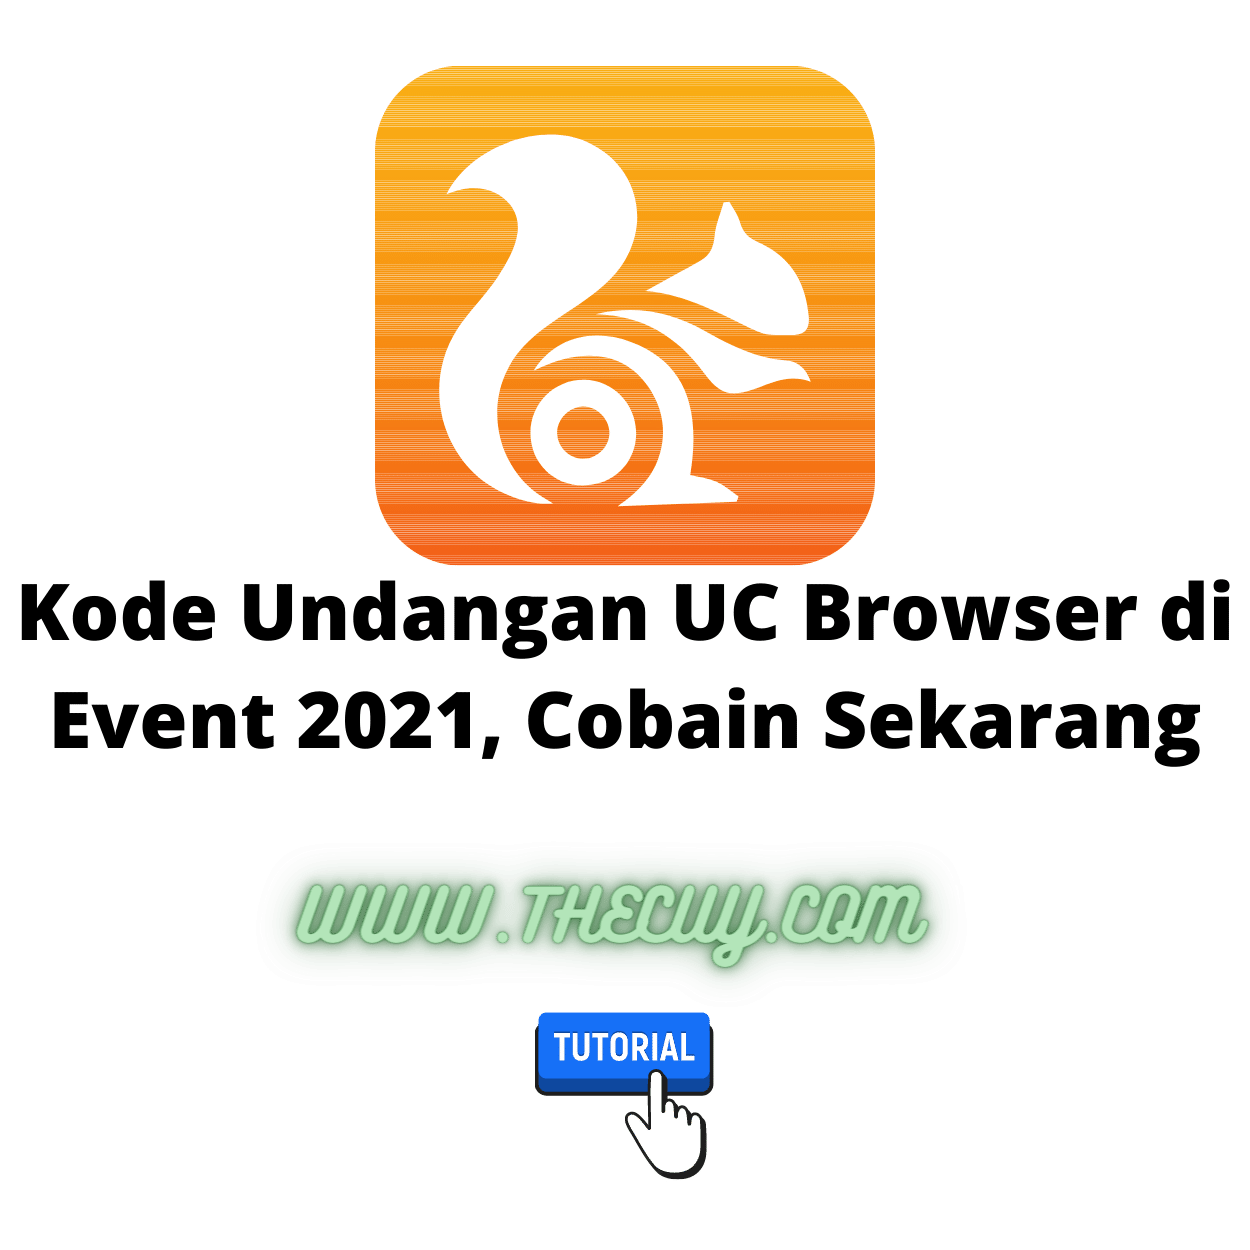 Kode Undangan UC Browser di Event 2021, Cobain Sekarang